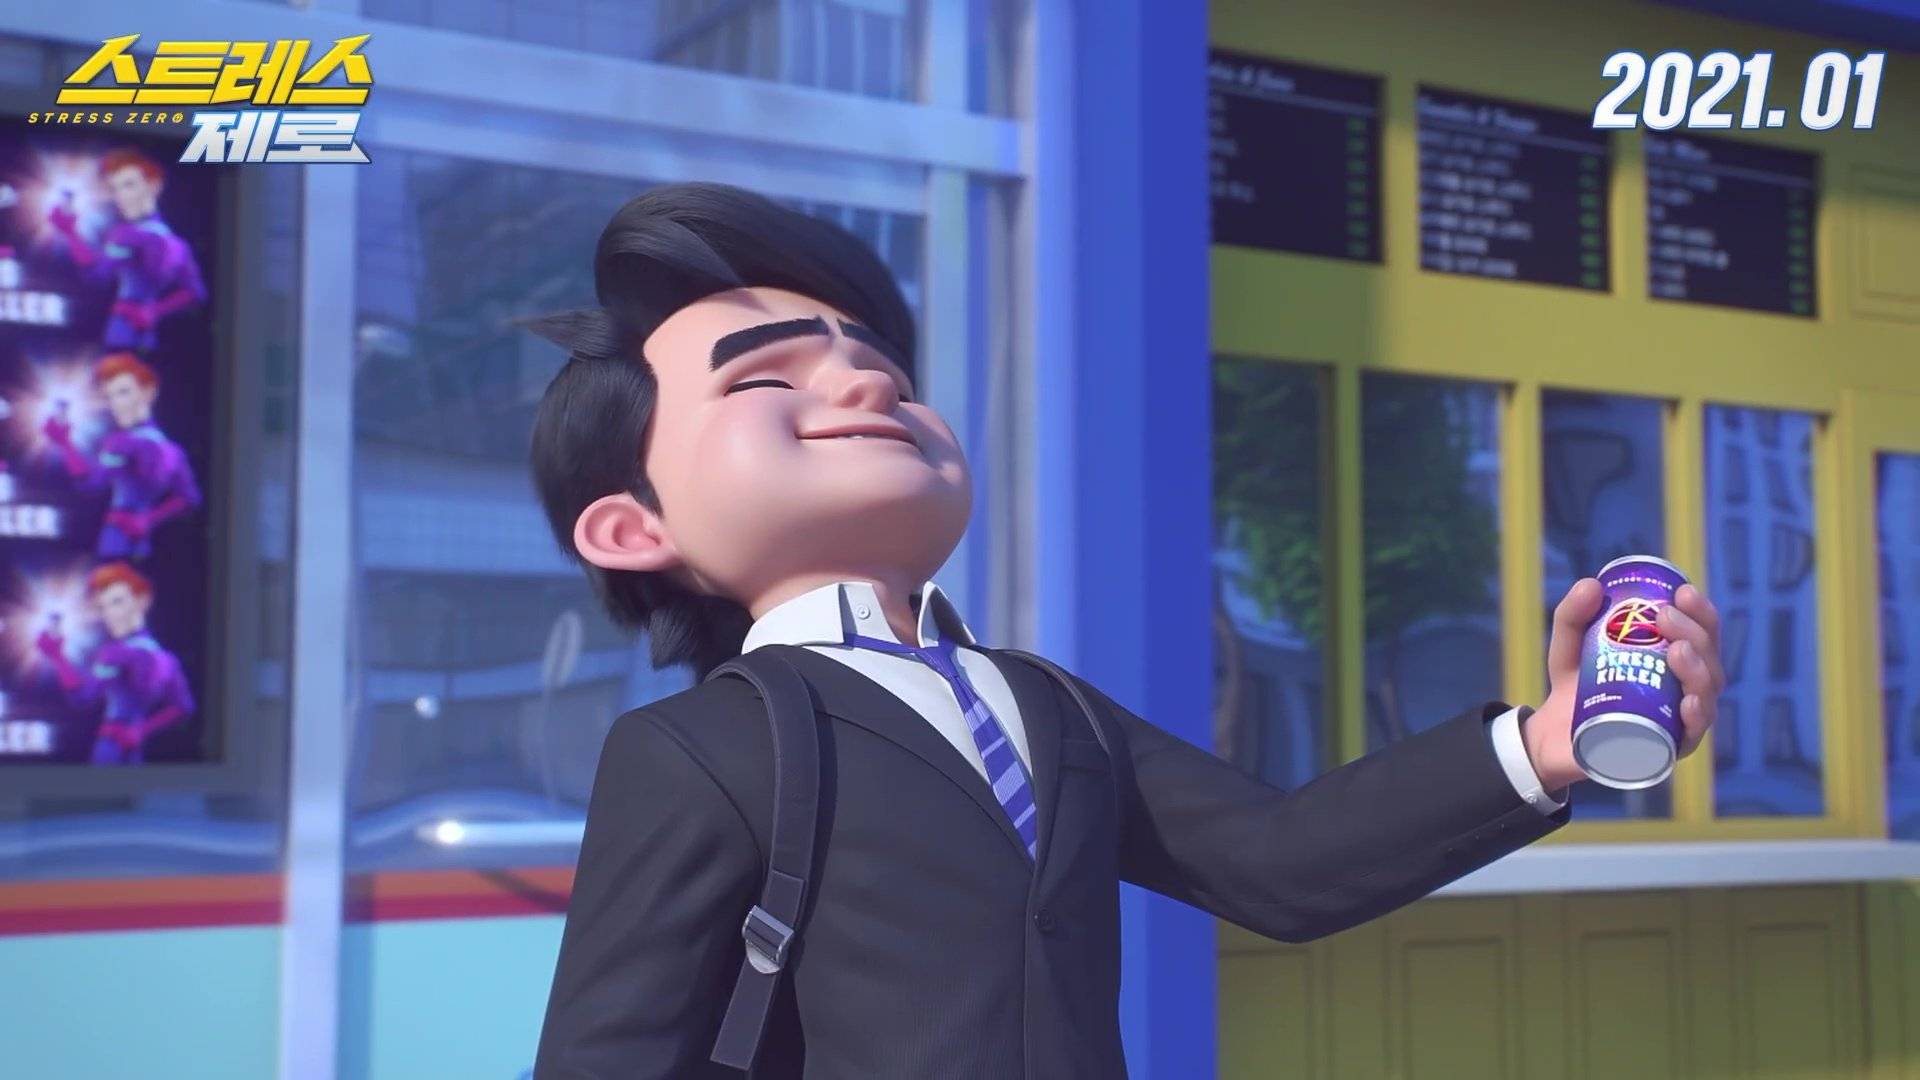 Video] Teaser Released for the Upcoming Korean Animated Movie 'Stress Zero'  @ HanCinema